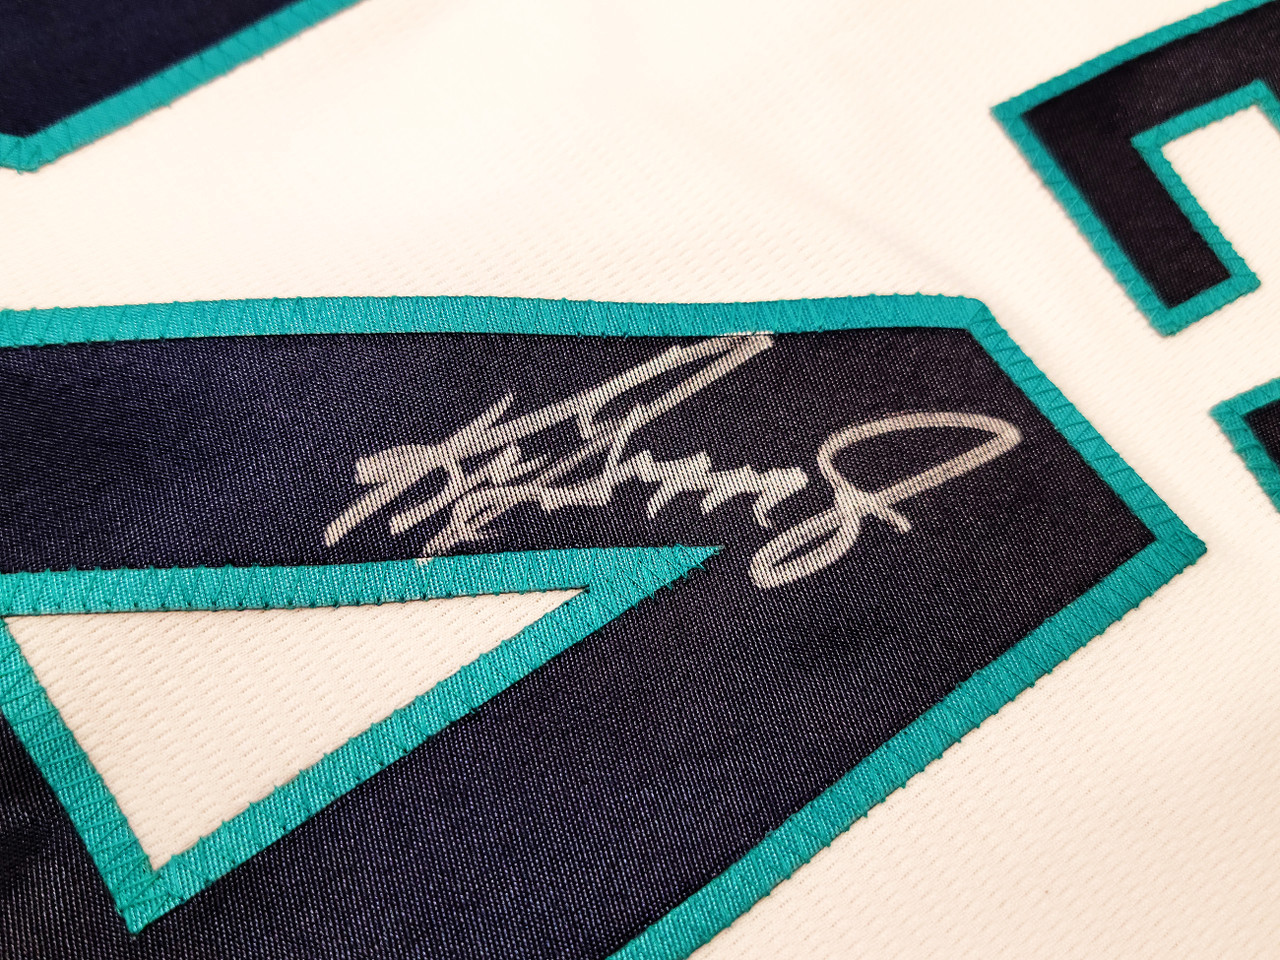 Seattle Mariners Ken Griffey Jr. Autographed Teal Nike Jersey Size